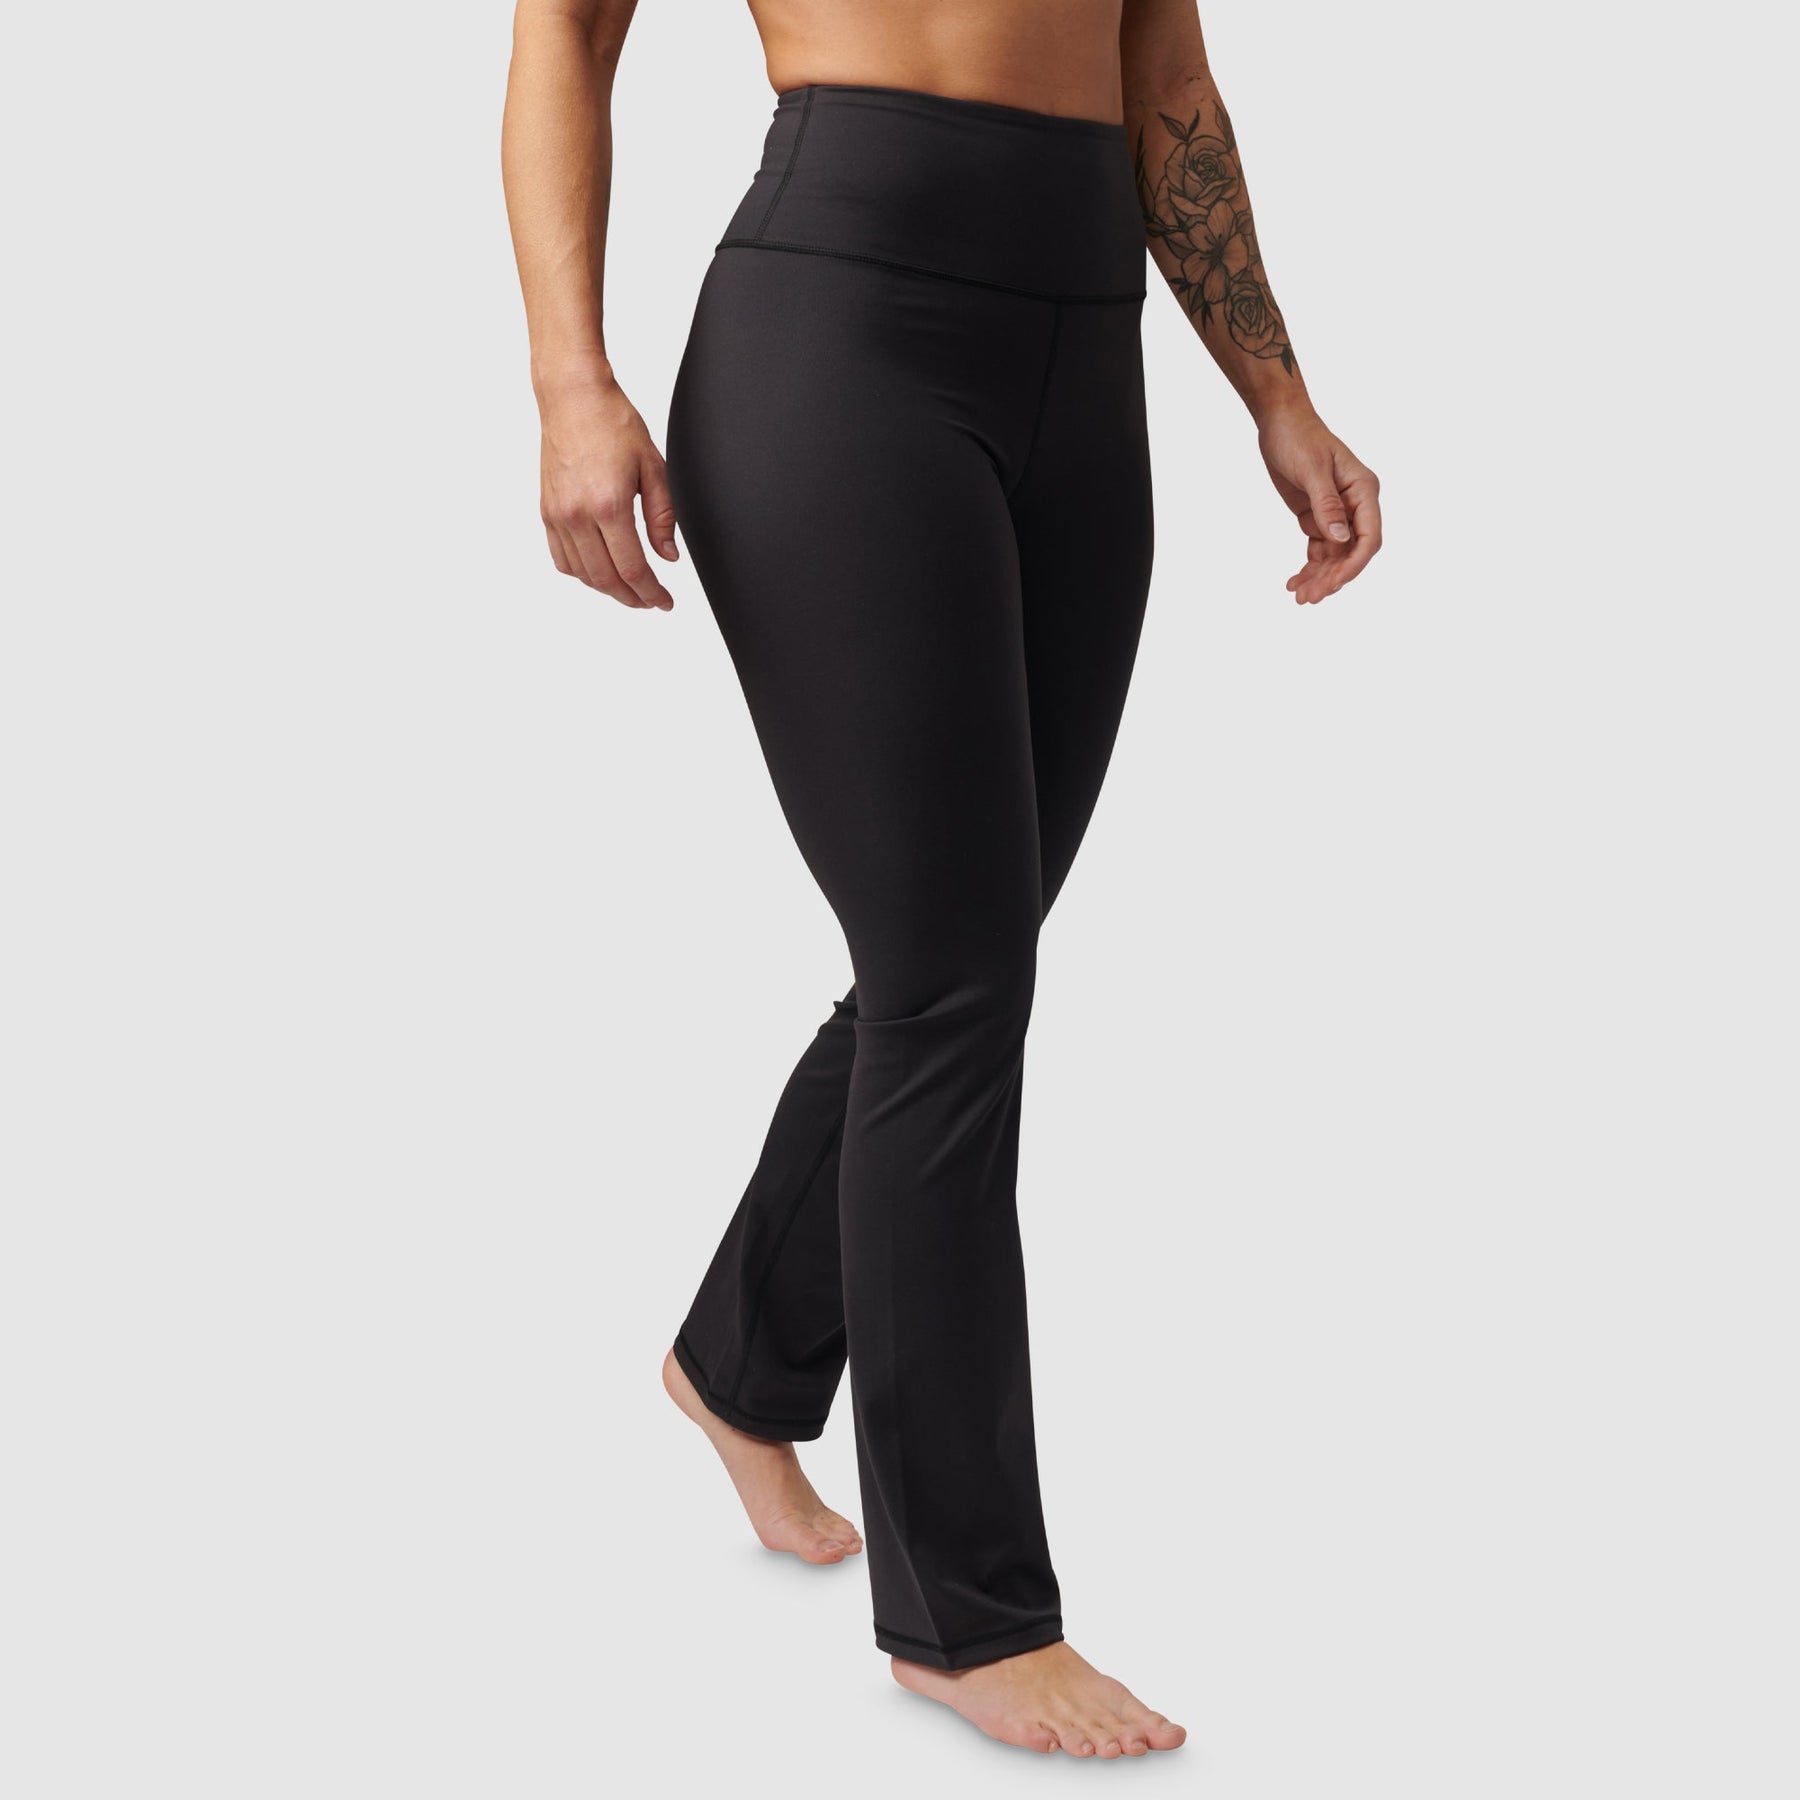 Web Yoga Pants High Waist Stretch 9 Cent Pants Female Hips Trim